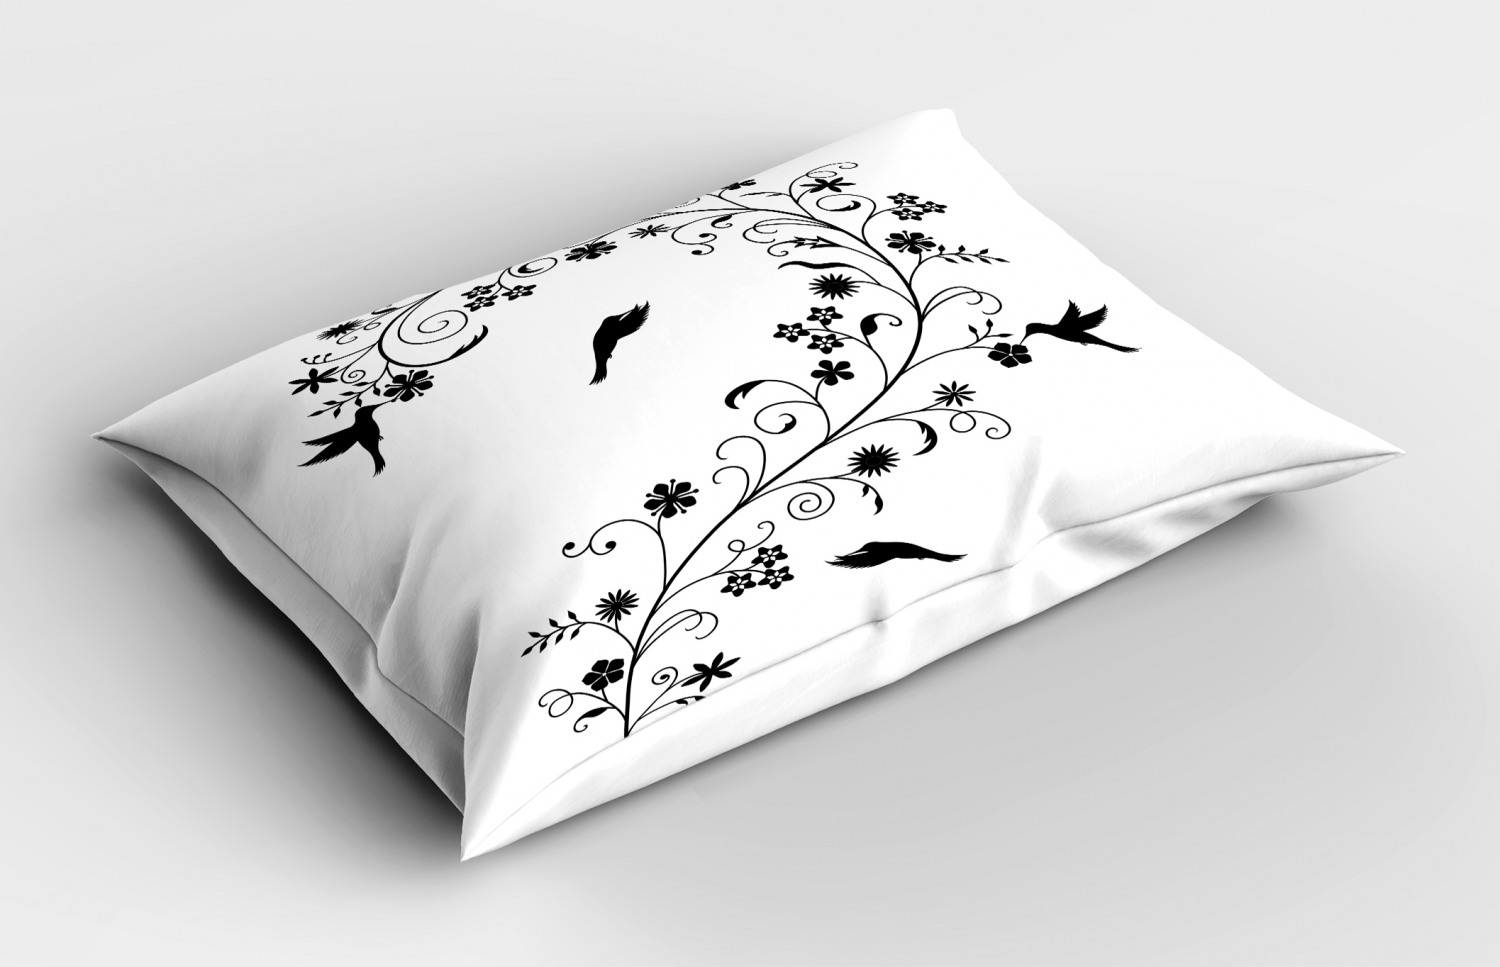 Details about   Yosemite Pillow Sham Decorative Pillowcase 3 Sizes for Bedroom Decor